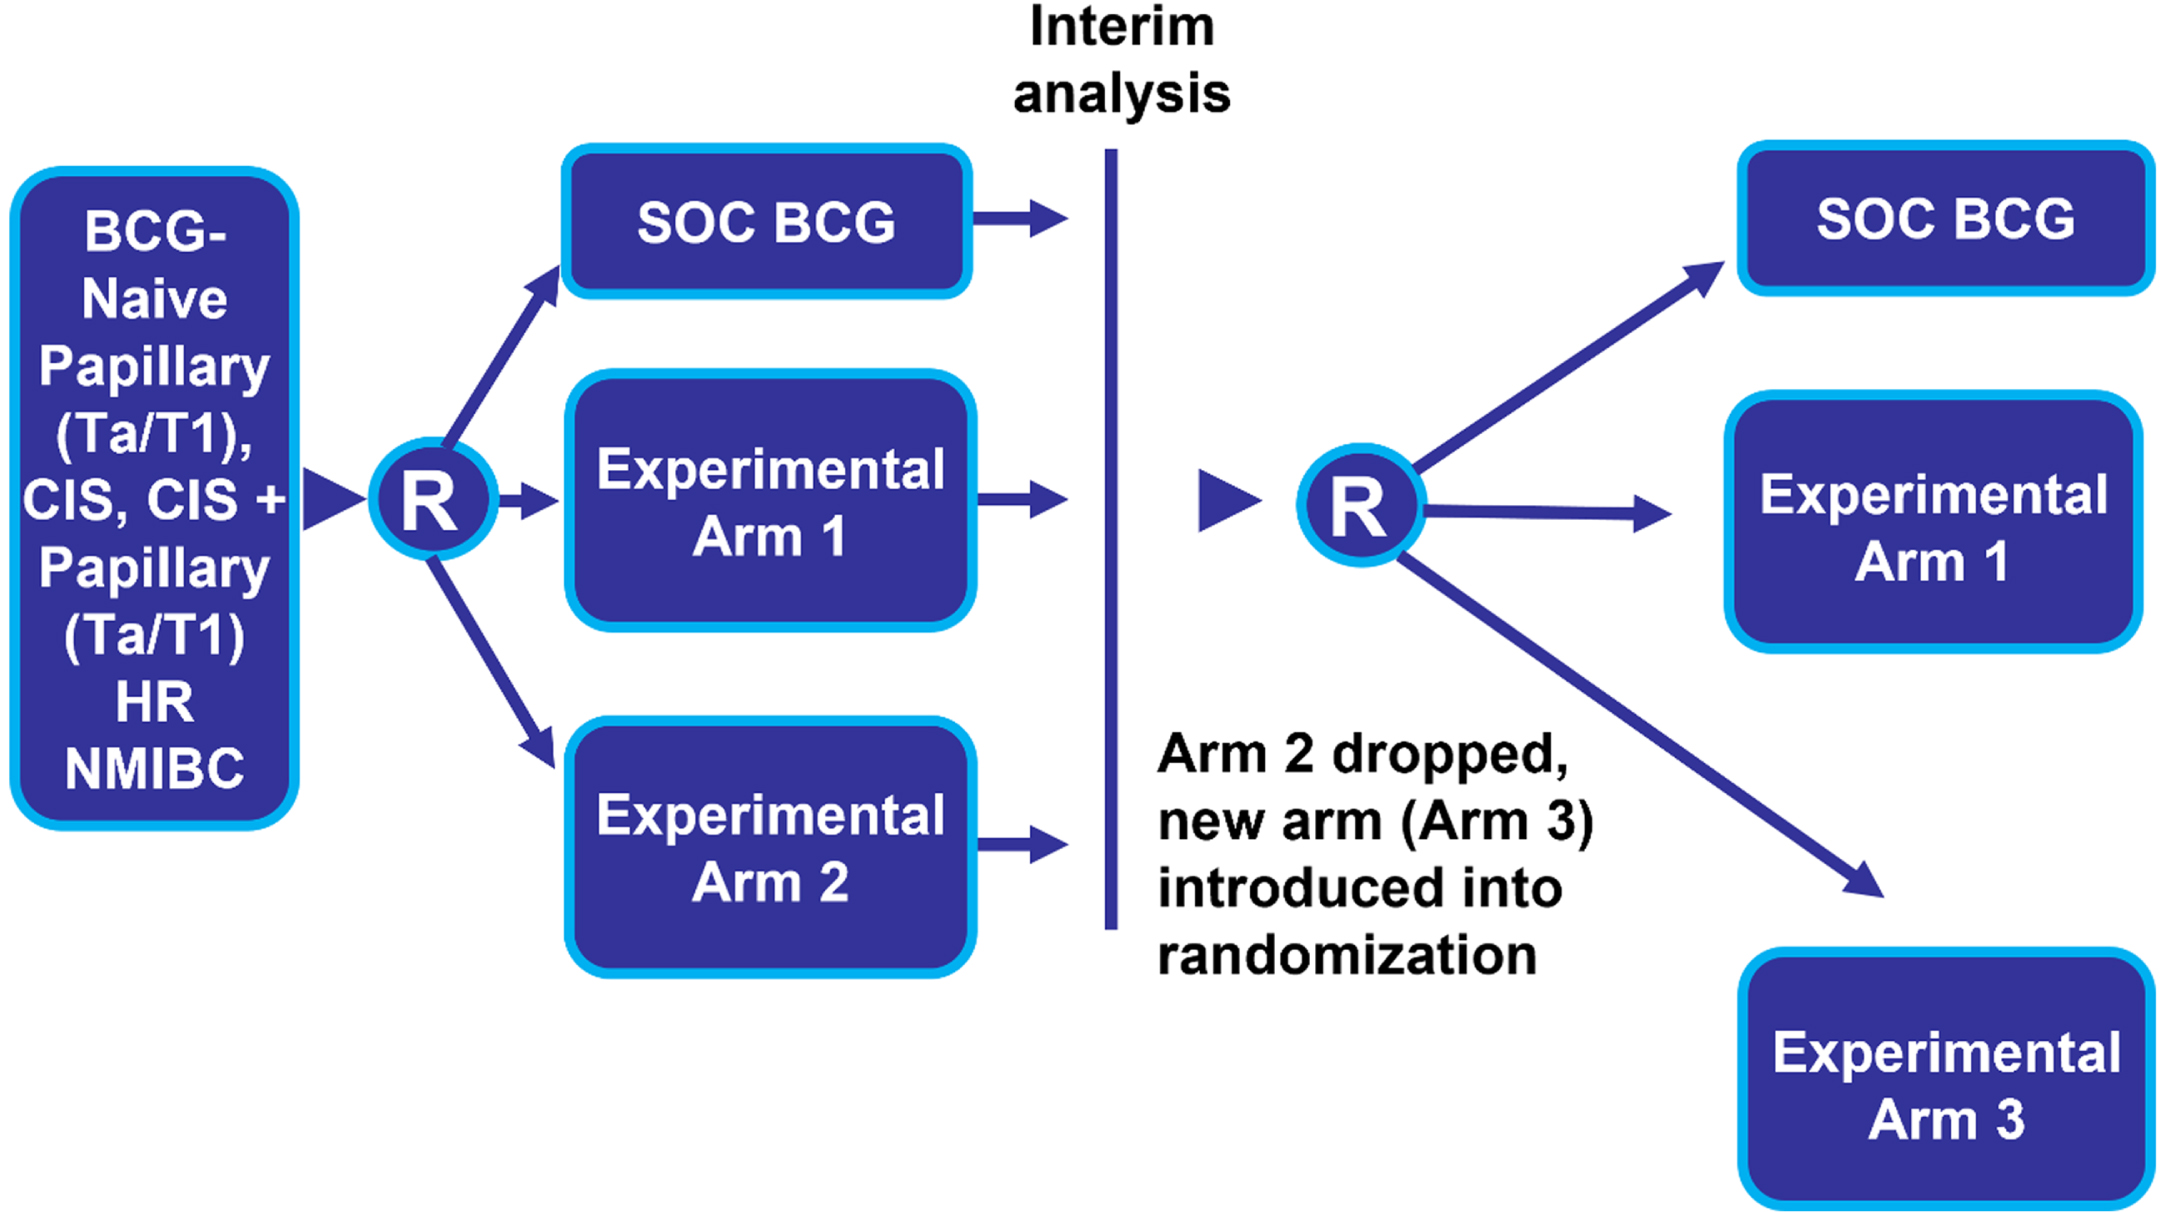 Randomized Platform Common Control Trial Design. Abbreviations: BCG: Bacillus Calmette-Guerin; CIS: carcinoma in situ; HR NMIBC: high-risk non-muscle invasive bladder cancer; R: randomize; SOC: standard of care; Tx: treatment.